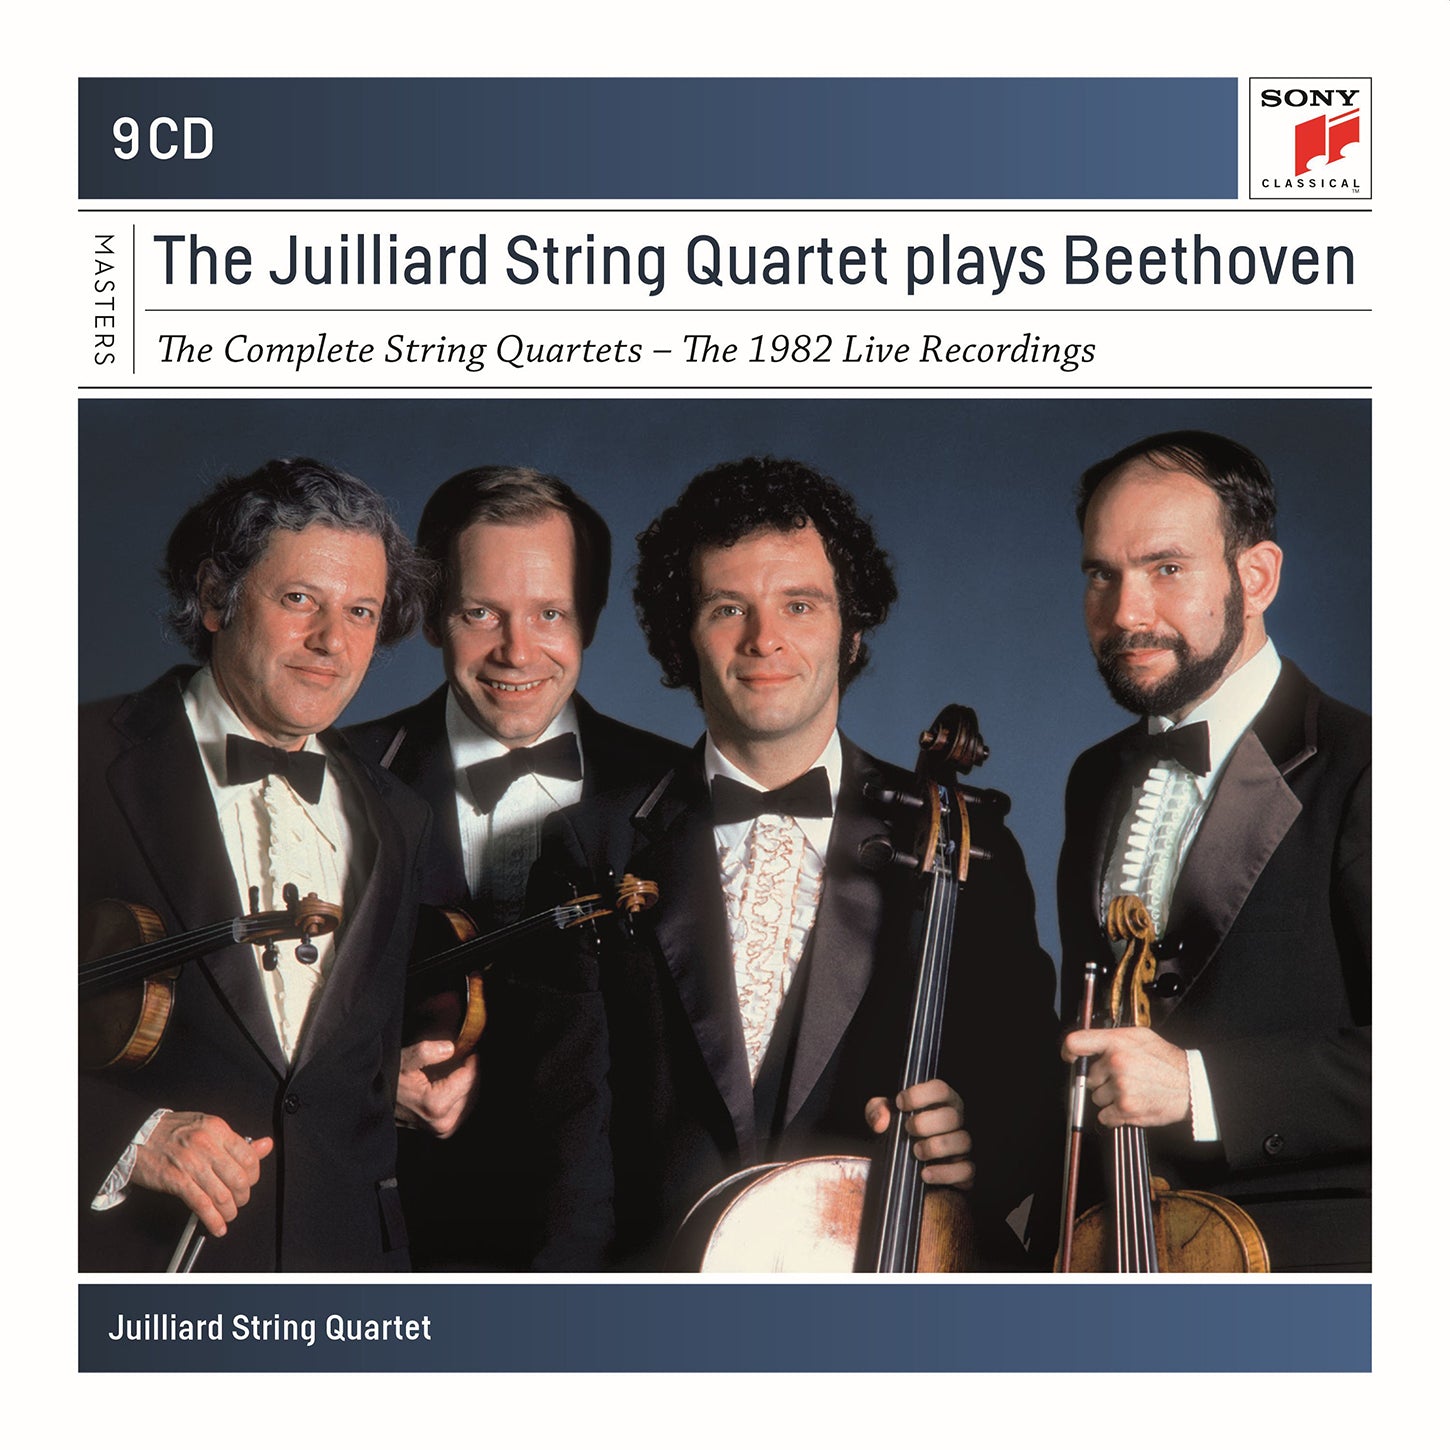 Beethoven: The Complete String Quartets (1982 Live Recordings) / Juilliard String Quartet